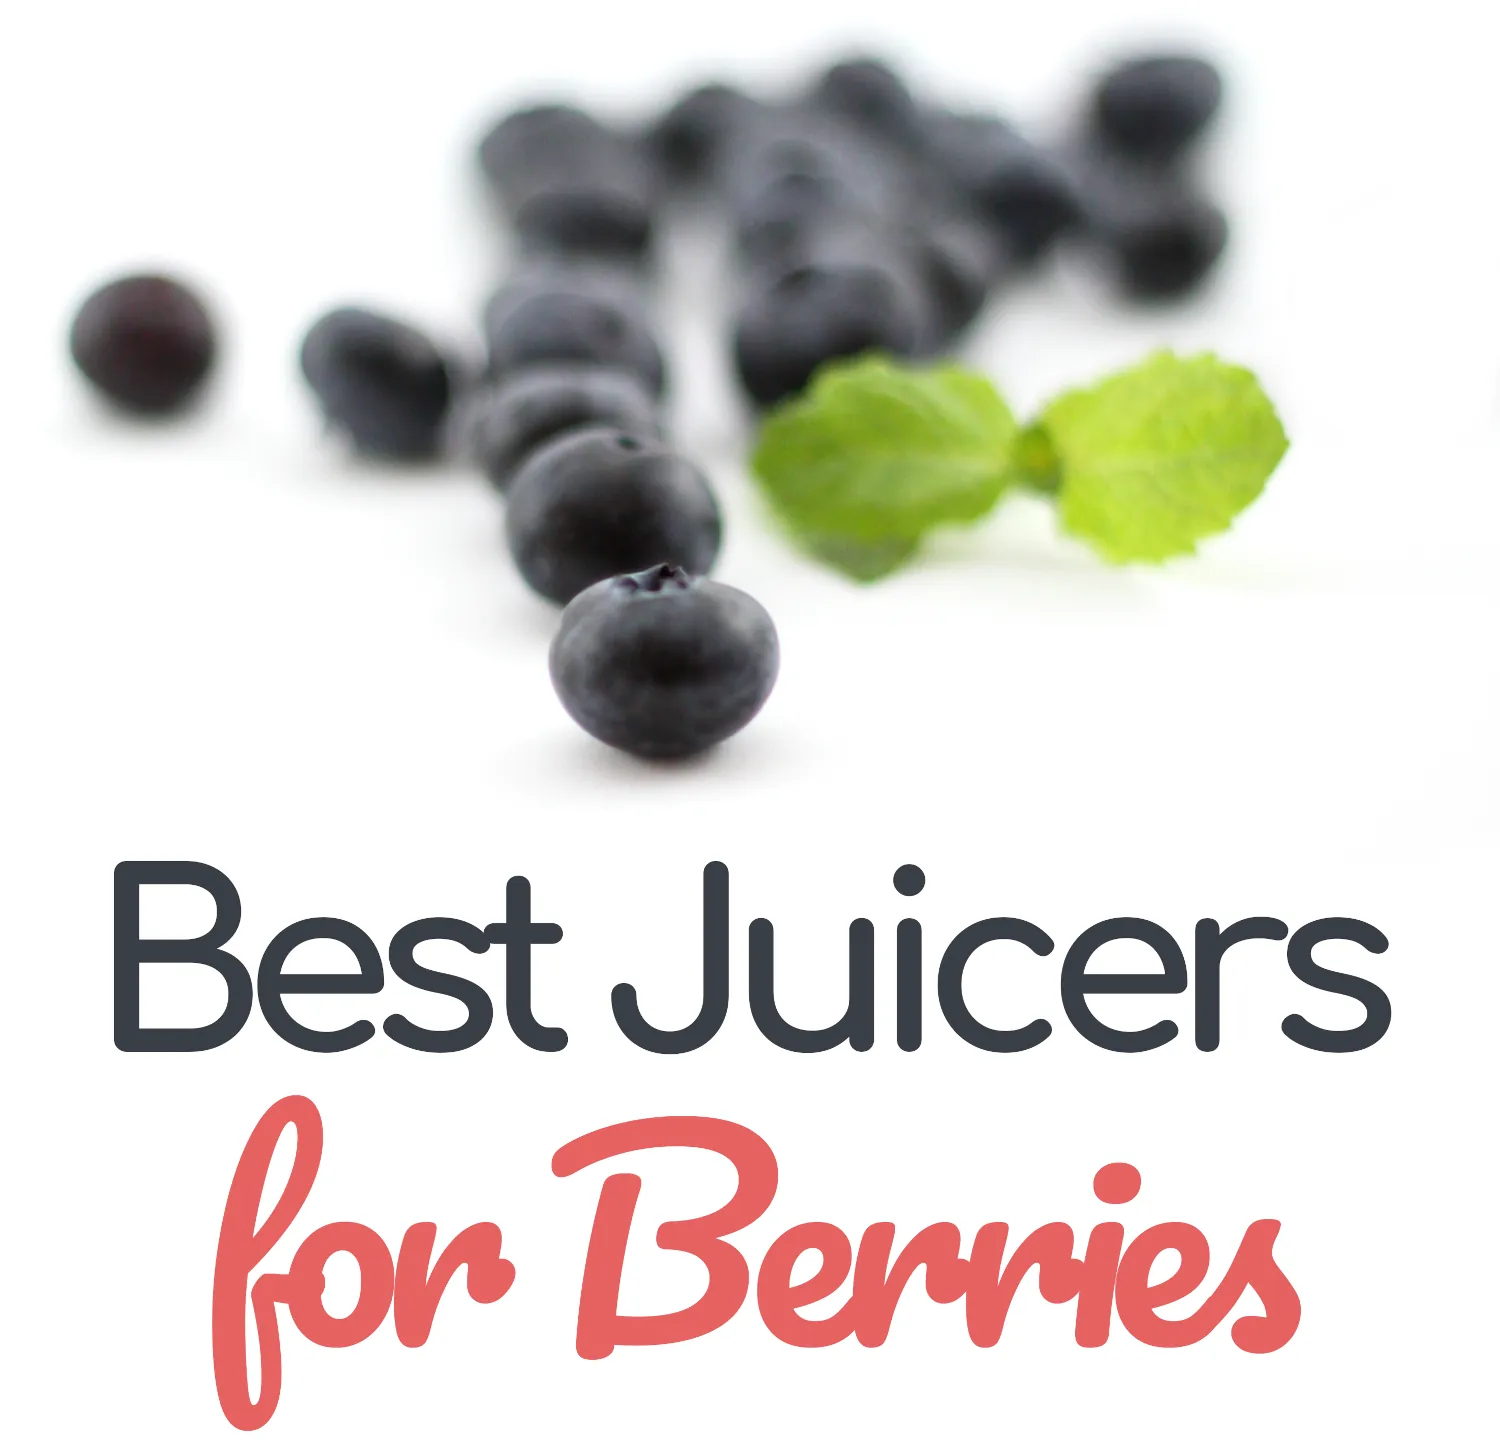 best juicers for berries